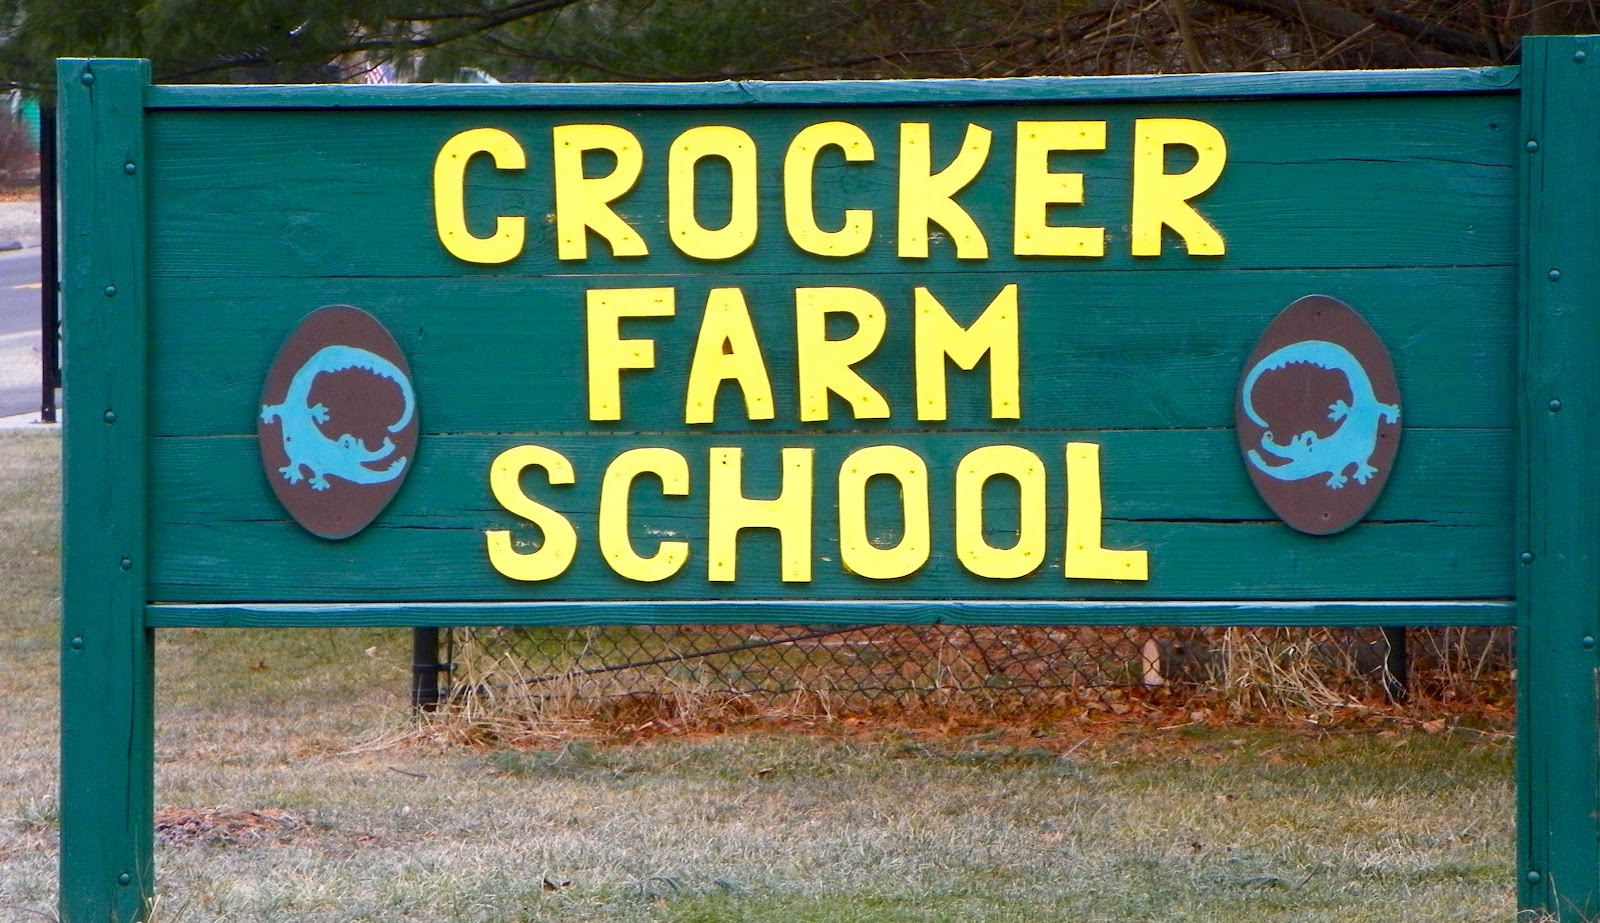 http://2.bp.blogspot.com/-0LGP_aUiekk/Tz04EOTUmkI/AAAAAAAAFnA/1cNXp1-tLtk/s1600/Crocker+Farm+sign.JPG